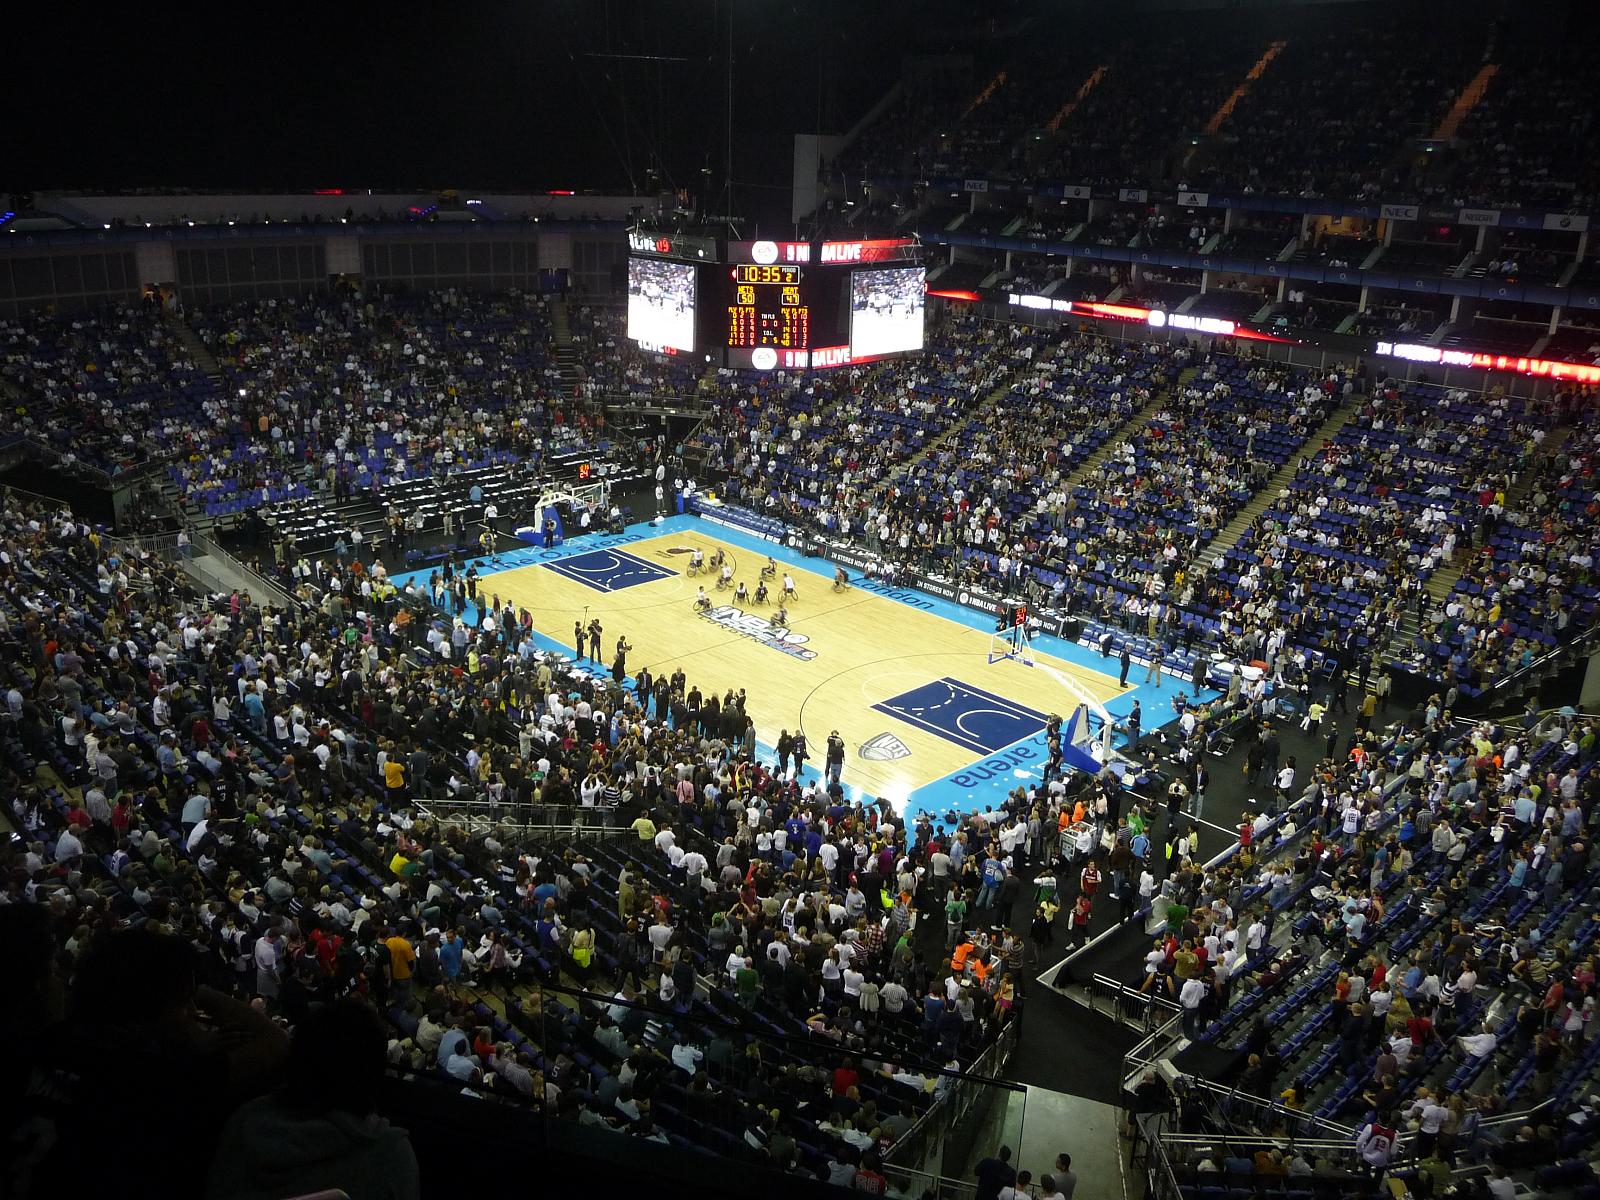 FileBasket Ball at the O2 Arena.jpg Wikimedia Commons